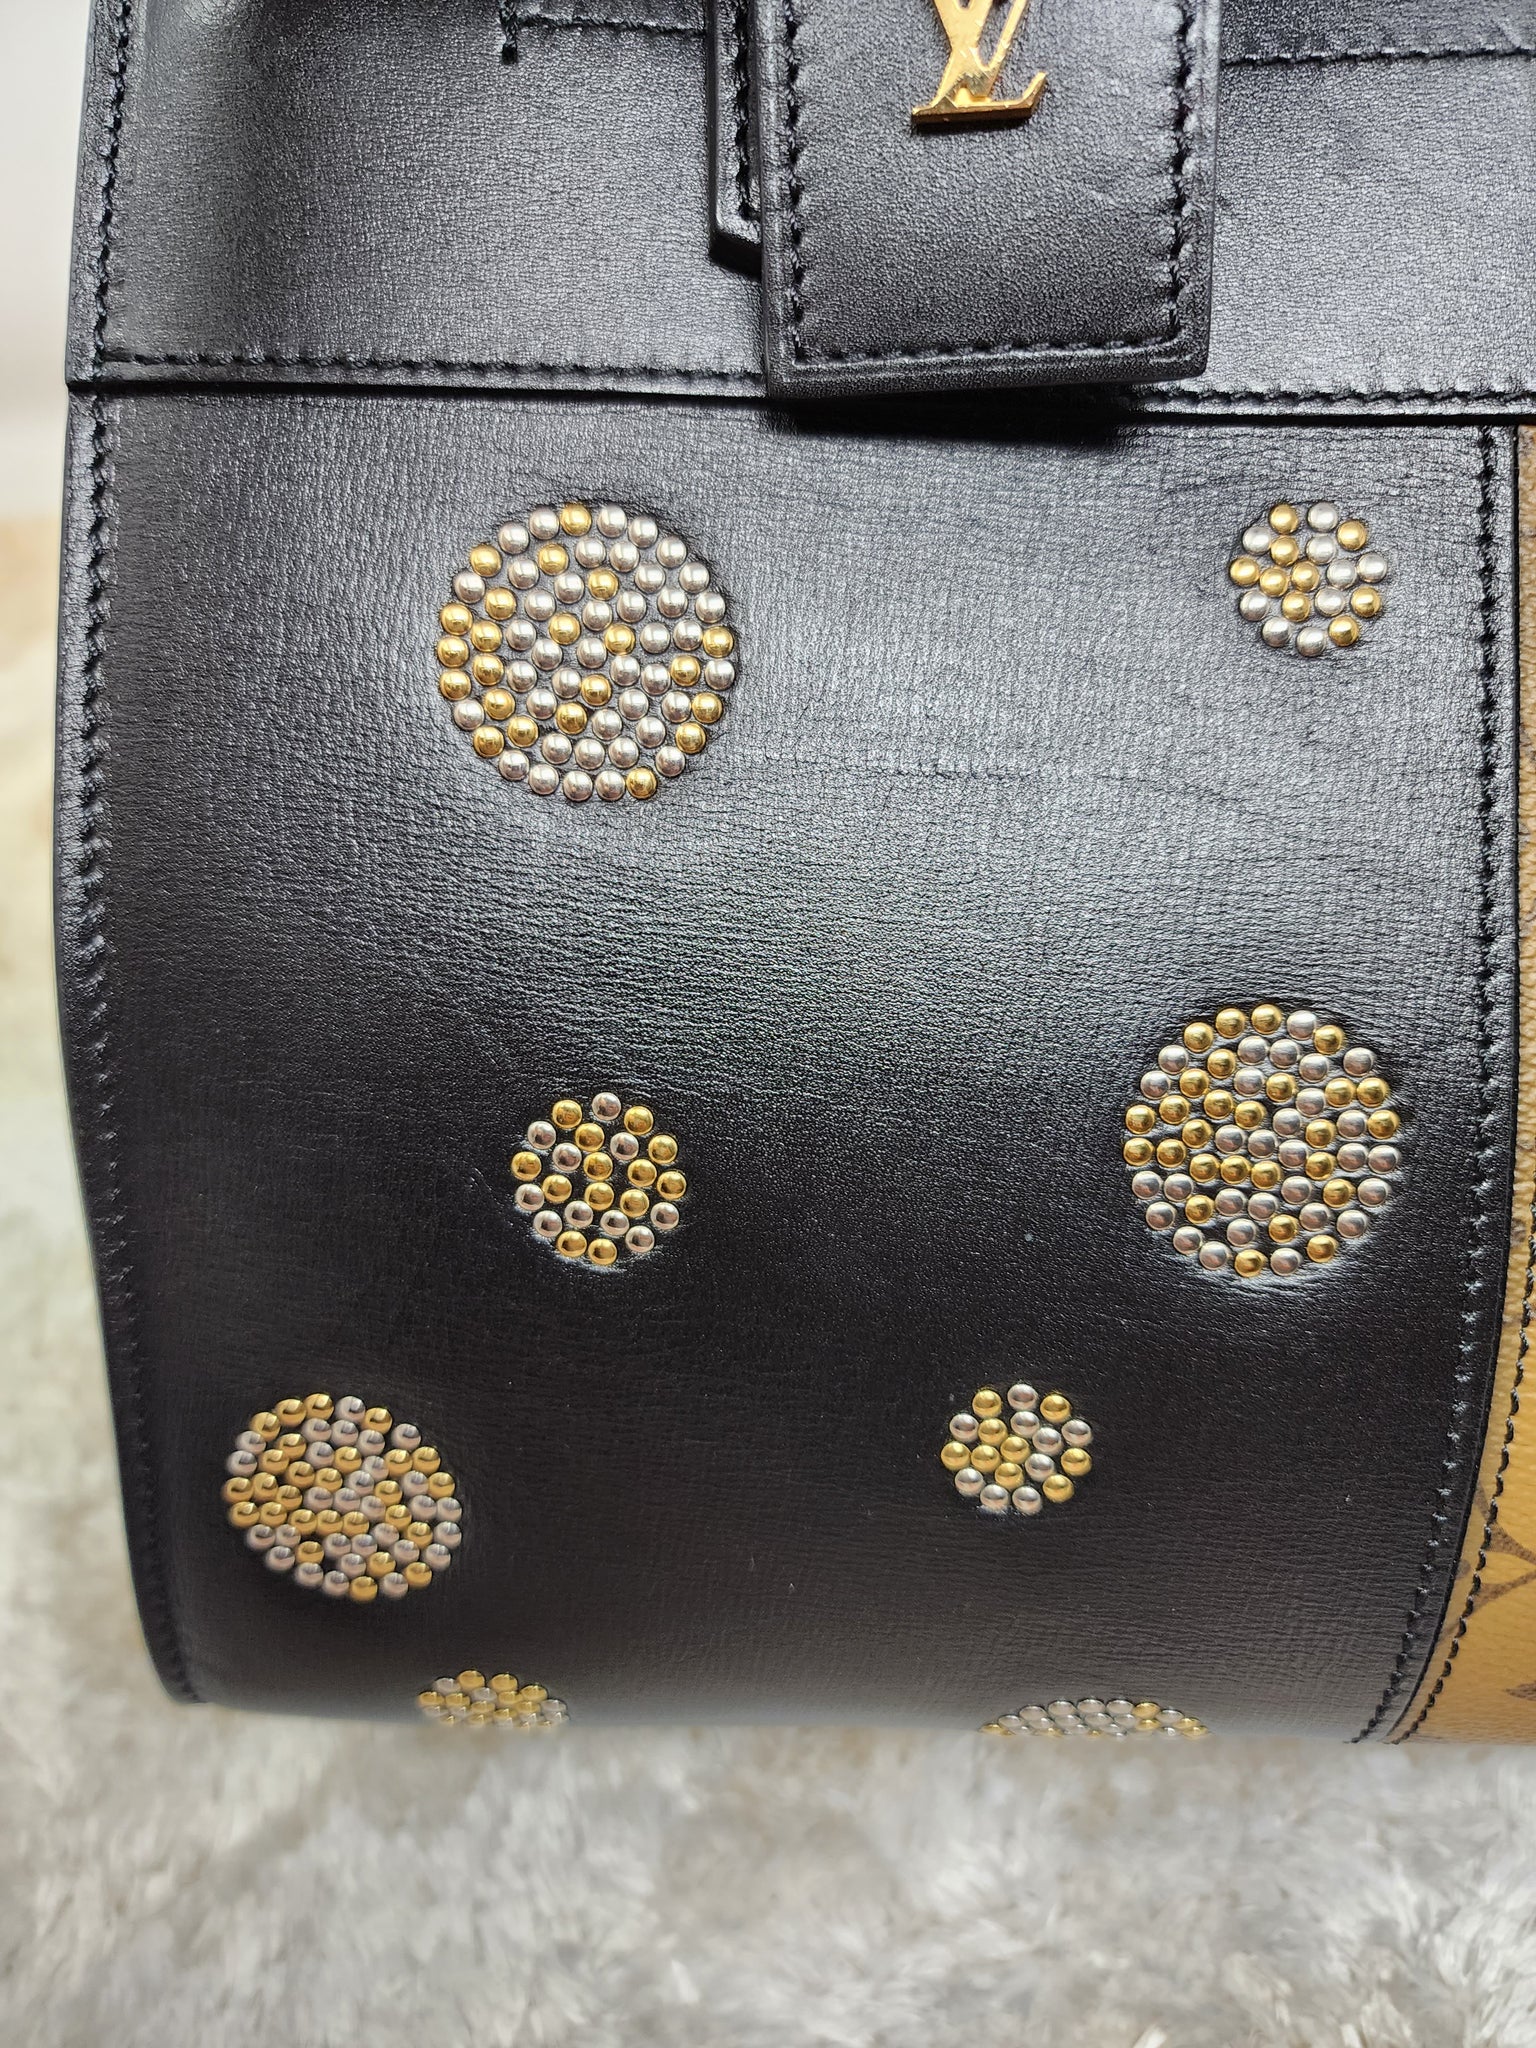 Louis Vuitton City Steamer Handbag Limited Edition Studded Reverse